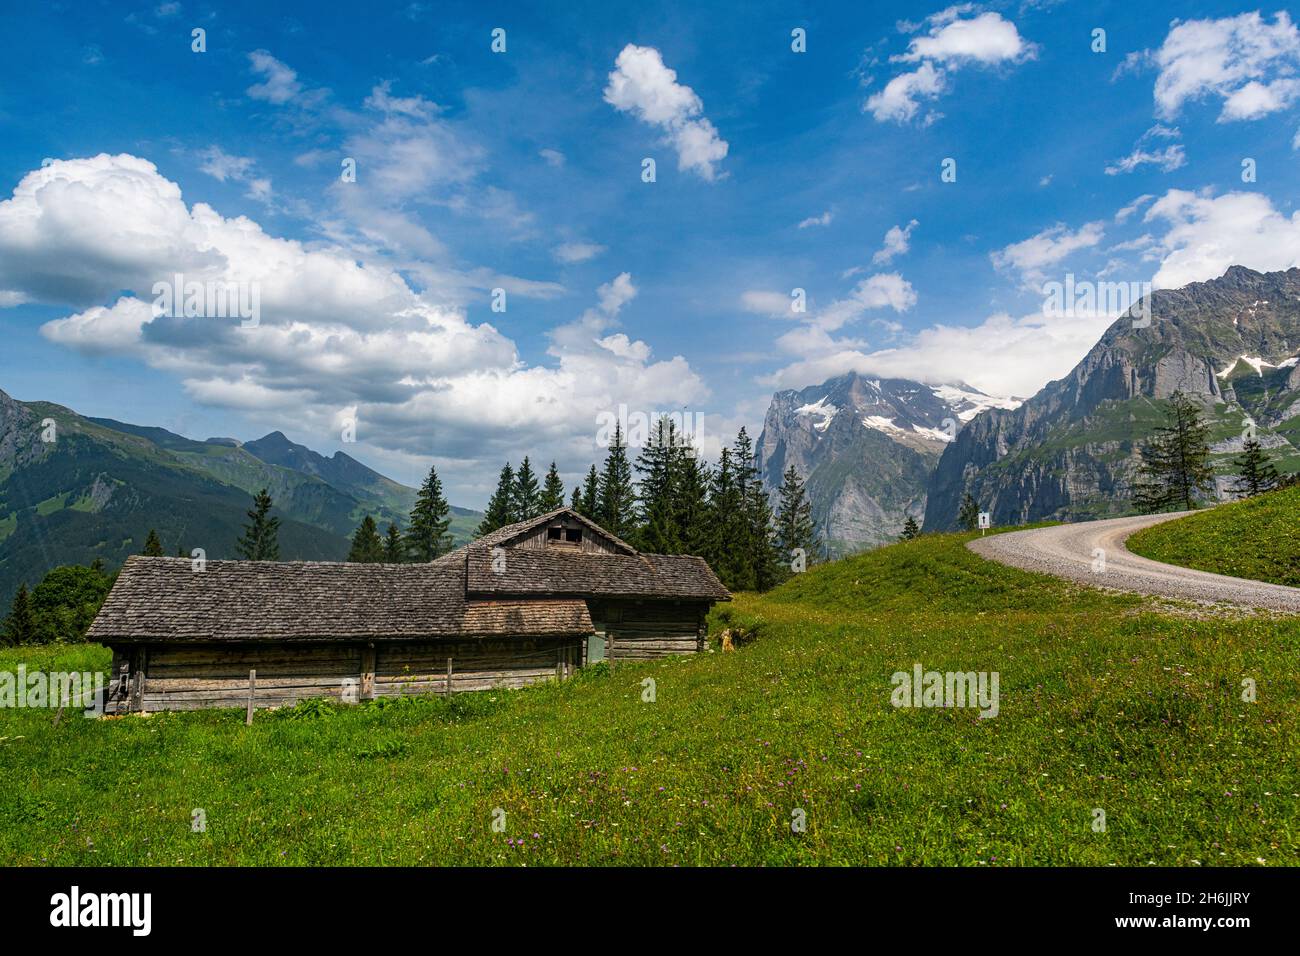 Eiger mountain, Grindelwald, Bernese Alps, Switzerland, Europe Stock Photo